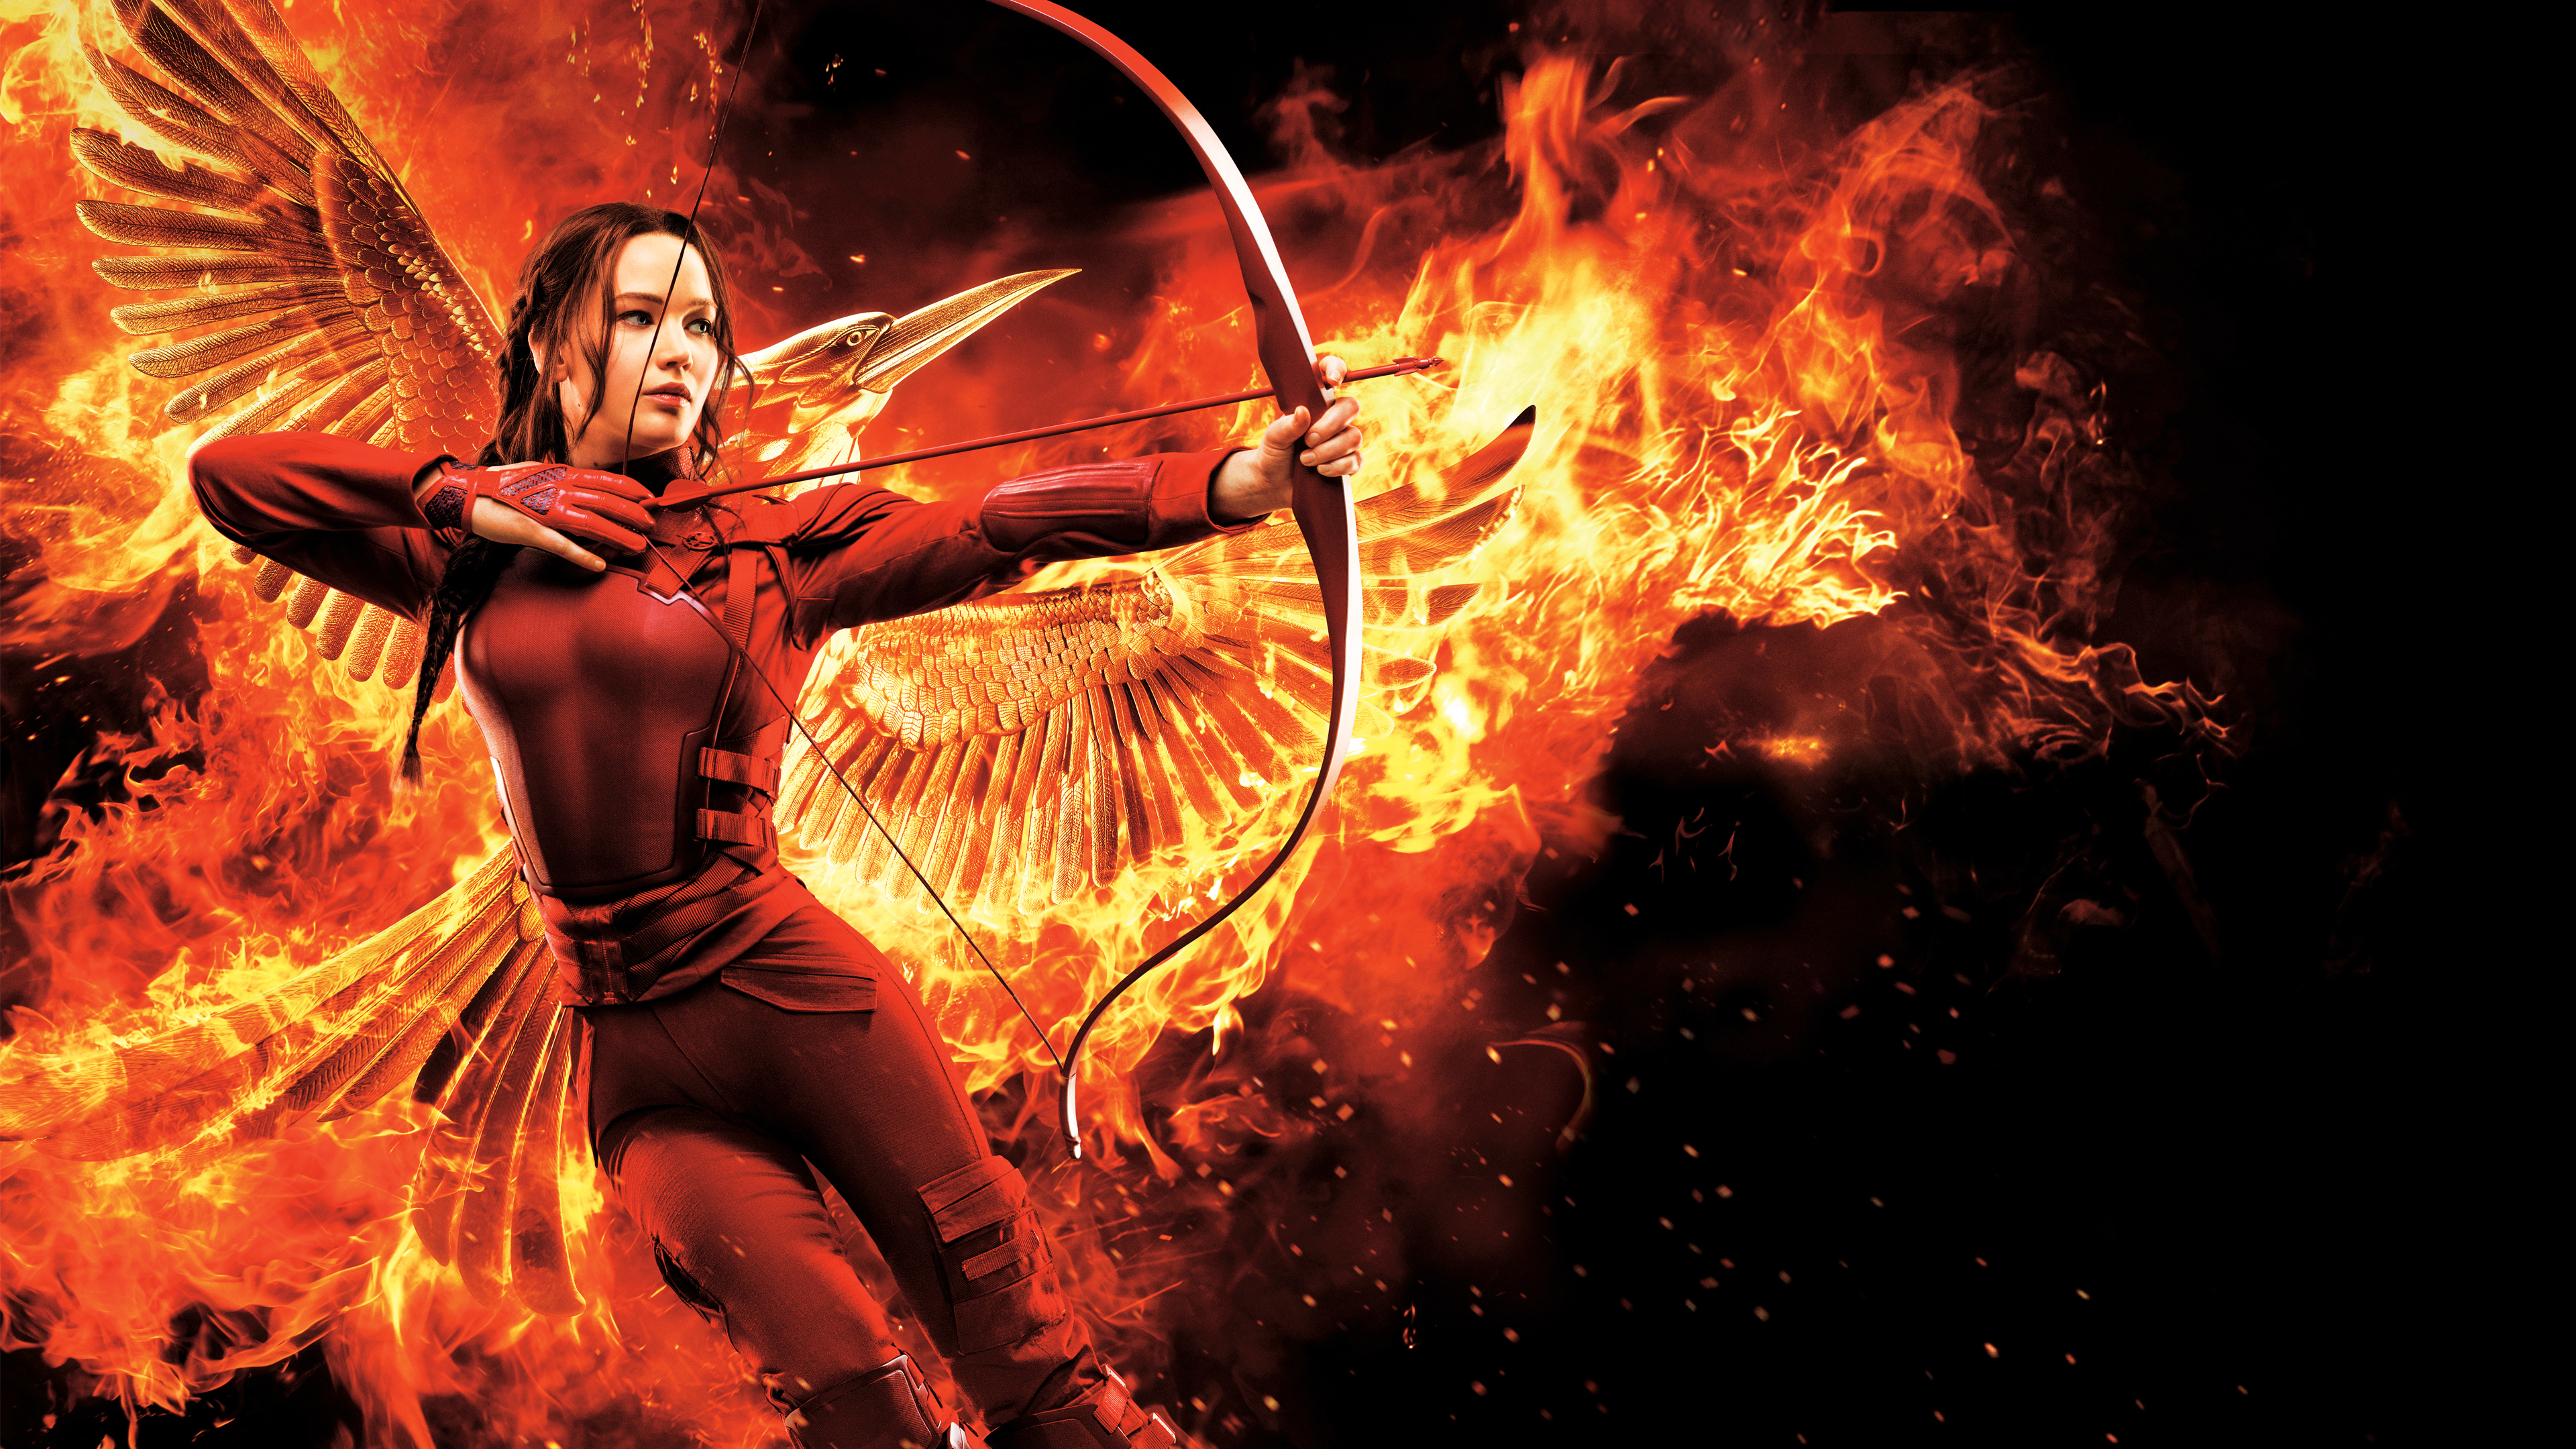 Hunger Games Mockingjay Part 2 Full Movie Download